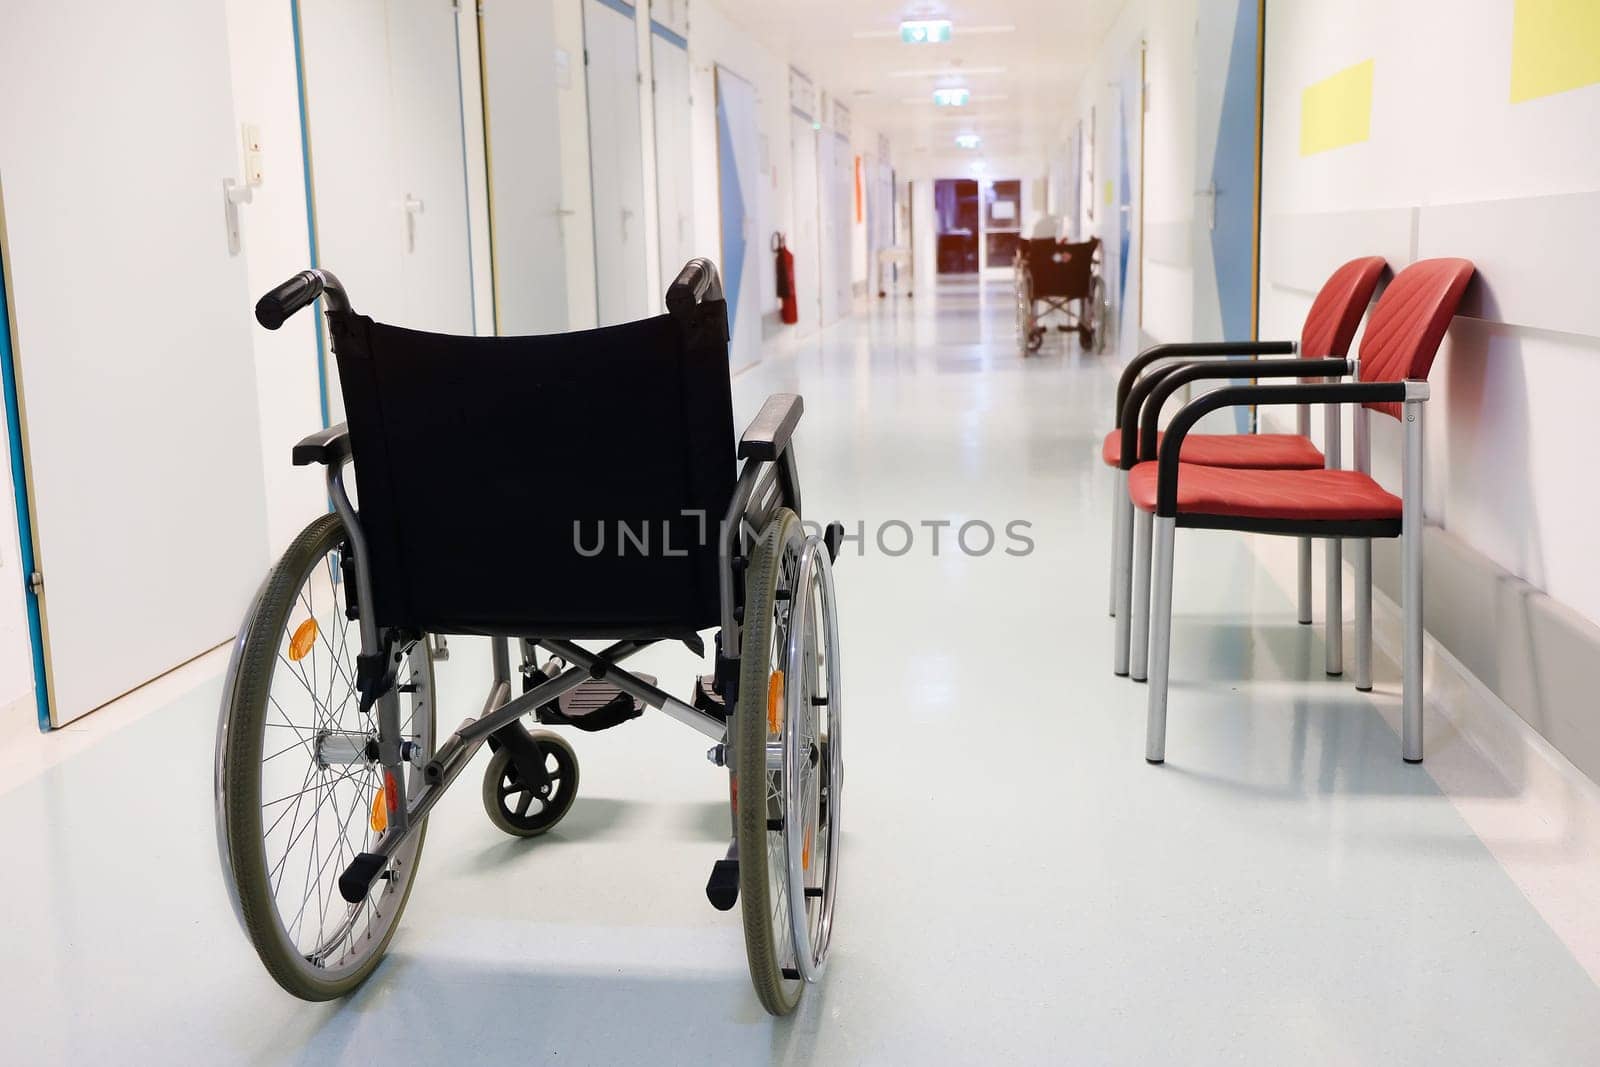 Wheel chair in the hospital corridor. Healthcare concept.